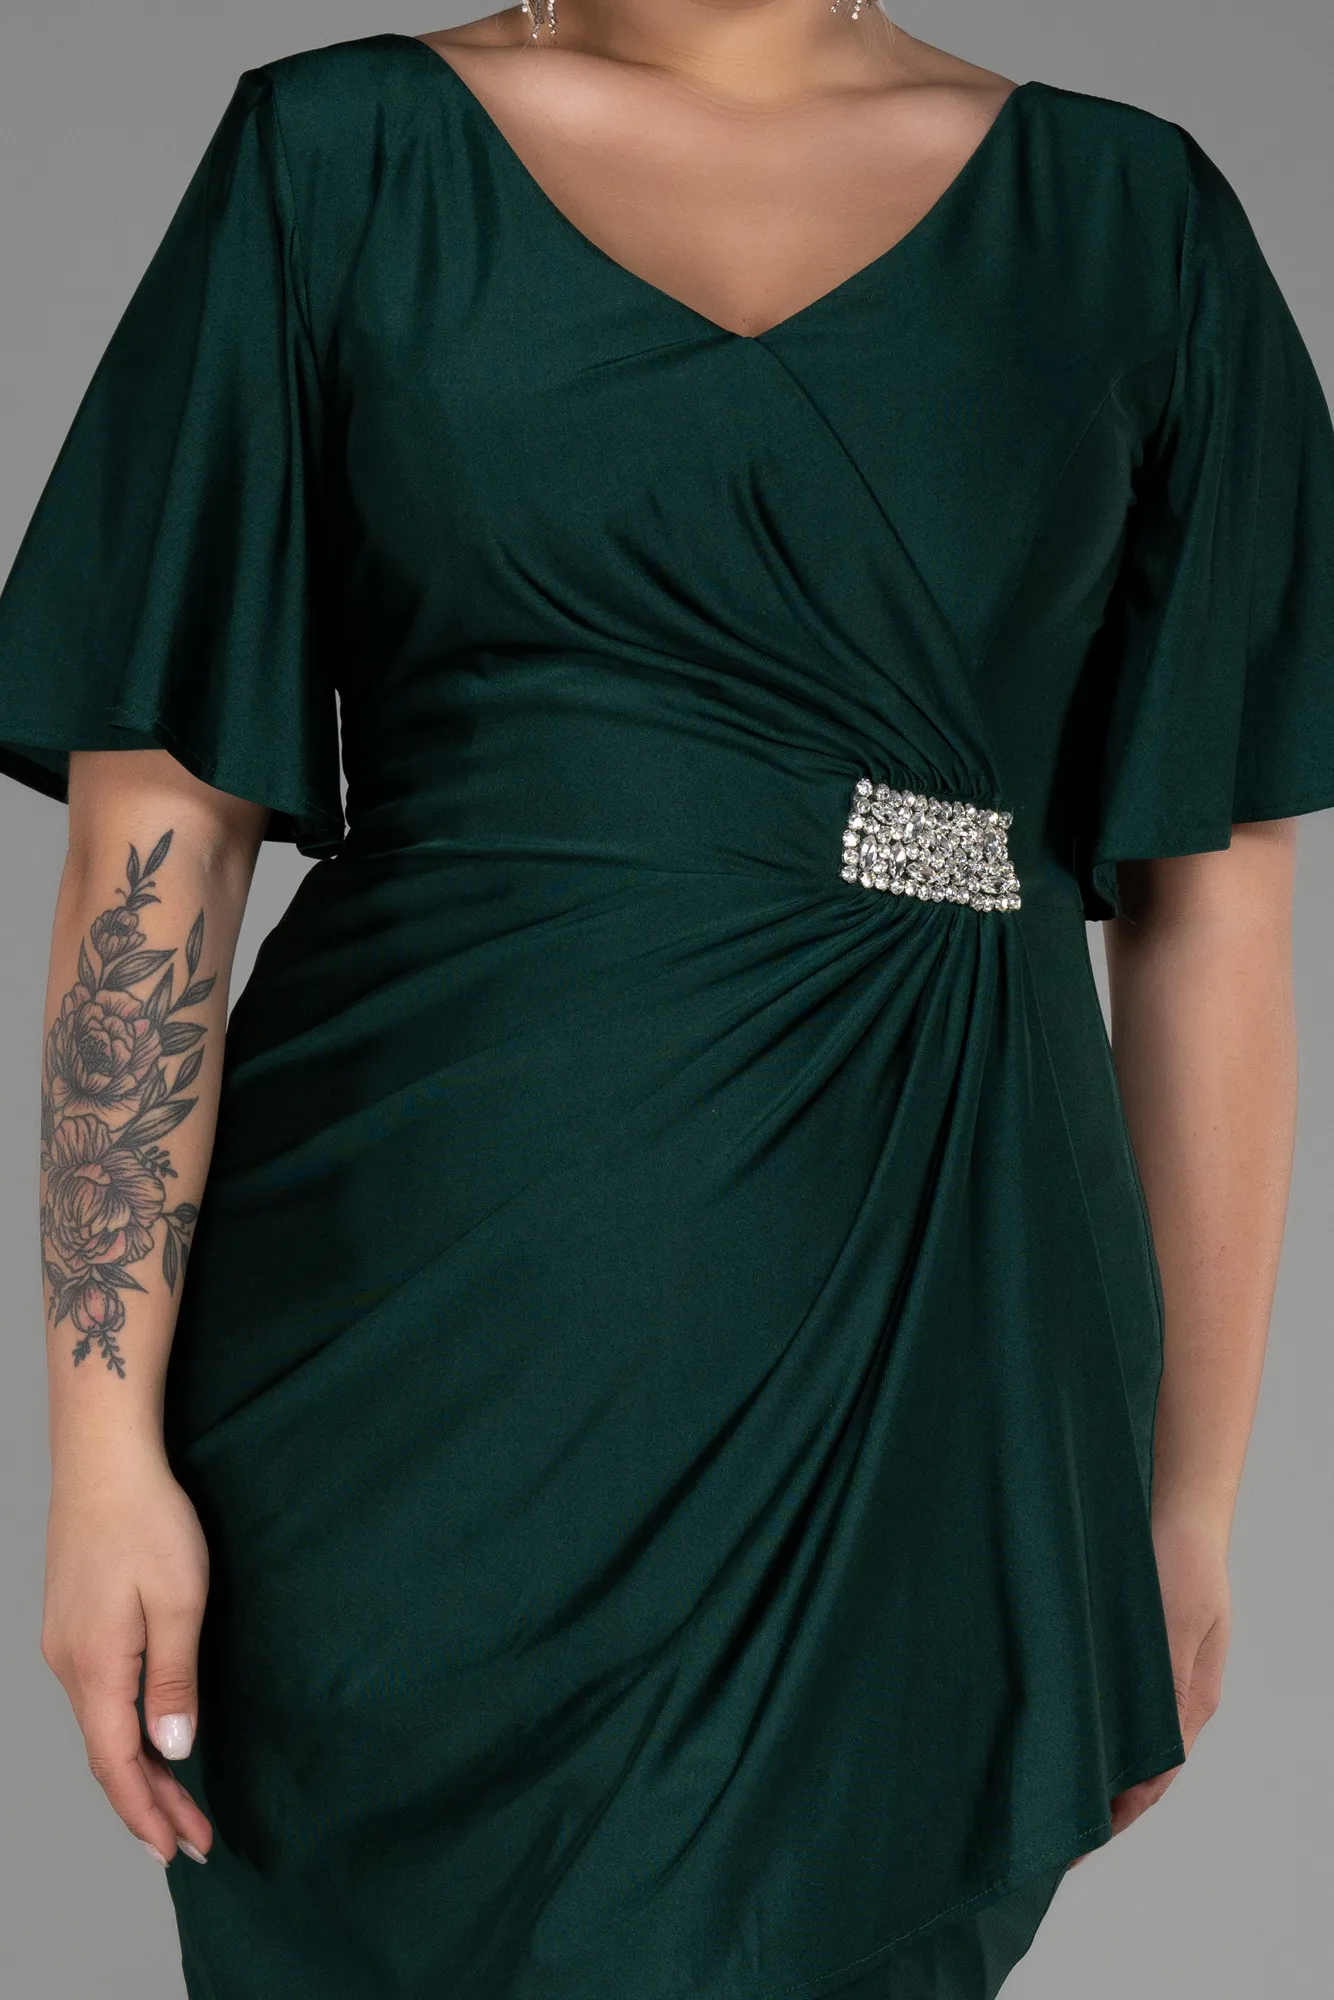 Emerald Green-Short Plus Size Evening Dress ABK1824